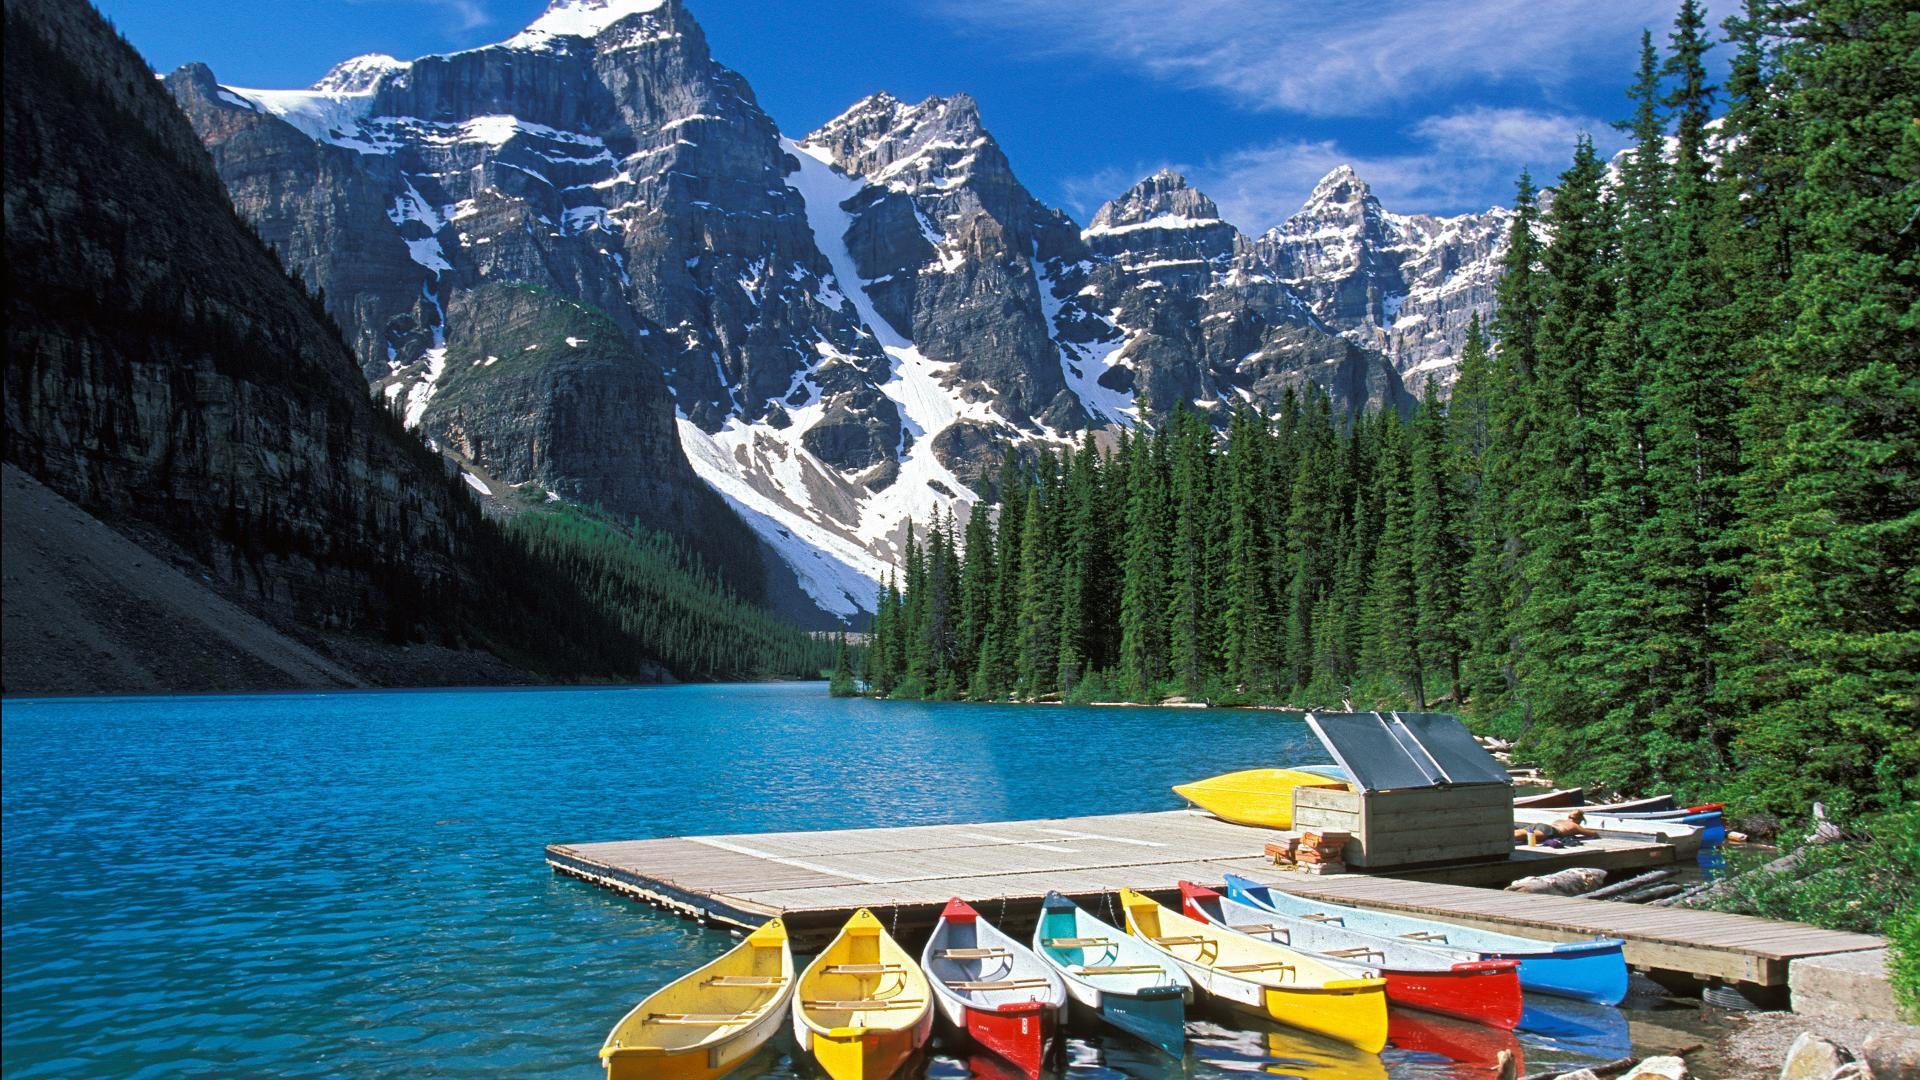 Lake canada moraine banff desktopia wallpaper wallpaper park image